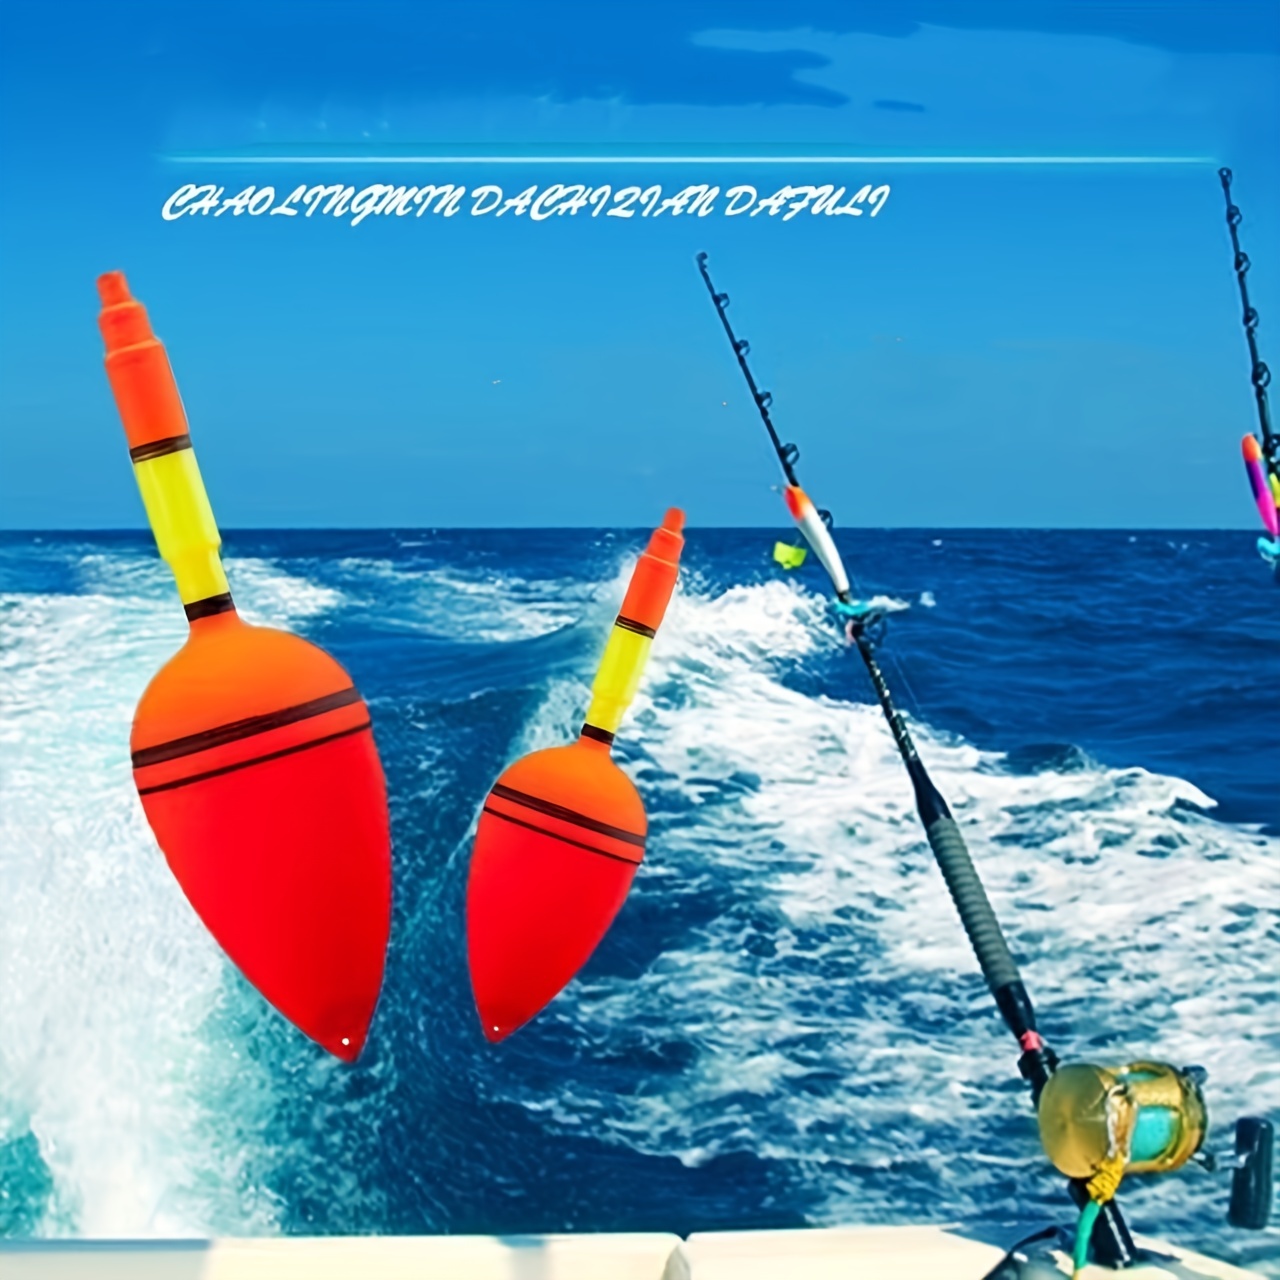 5Pcs Popping Floats Fluorescent Bobber Buoys Cork Float Fishing